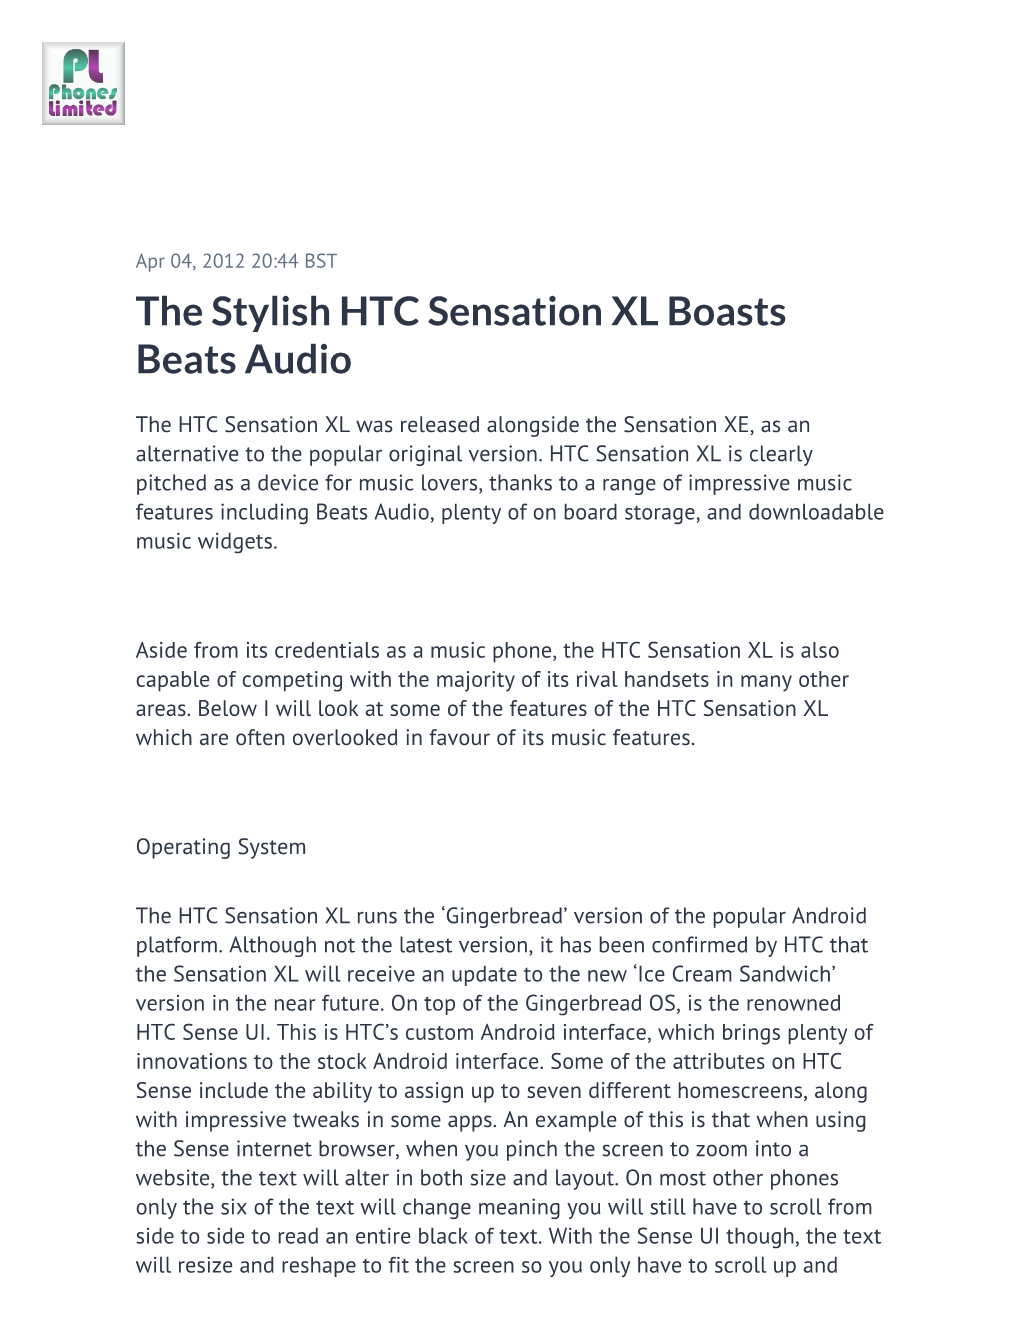 The Stylish HTC Sensation XL Boasts Beats Audio